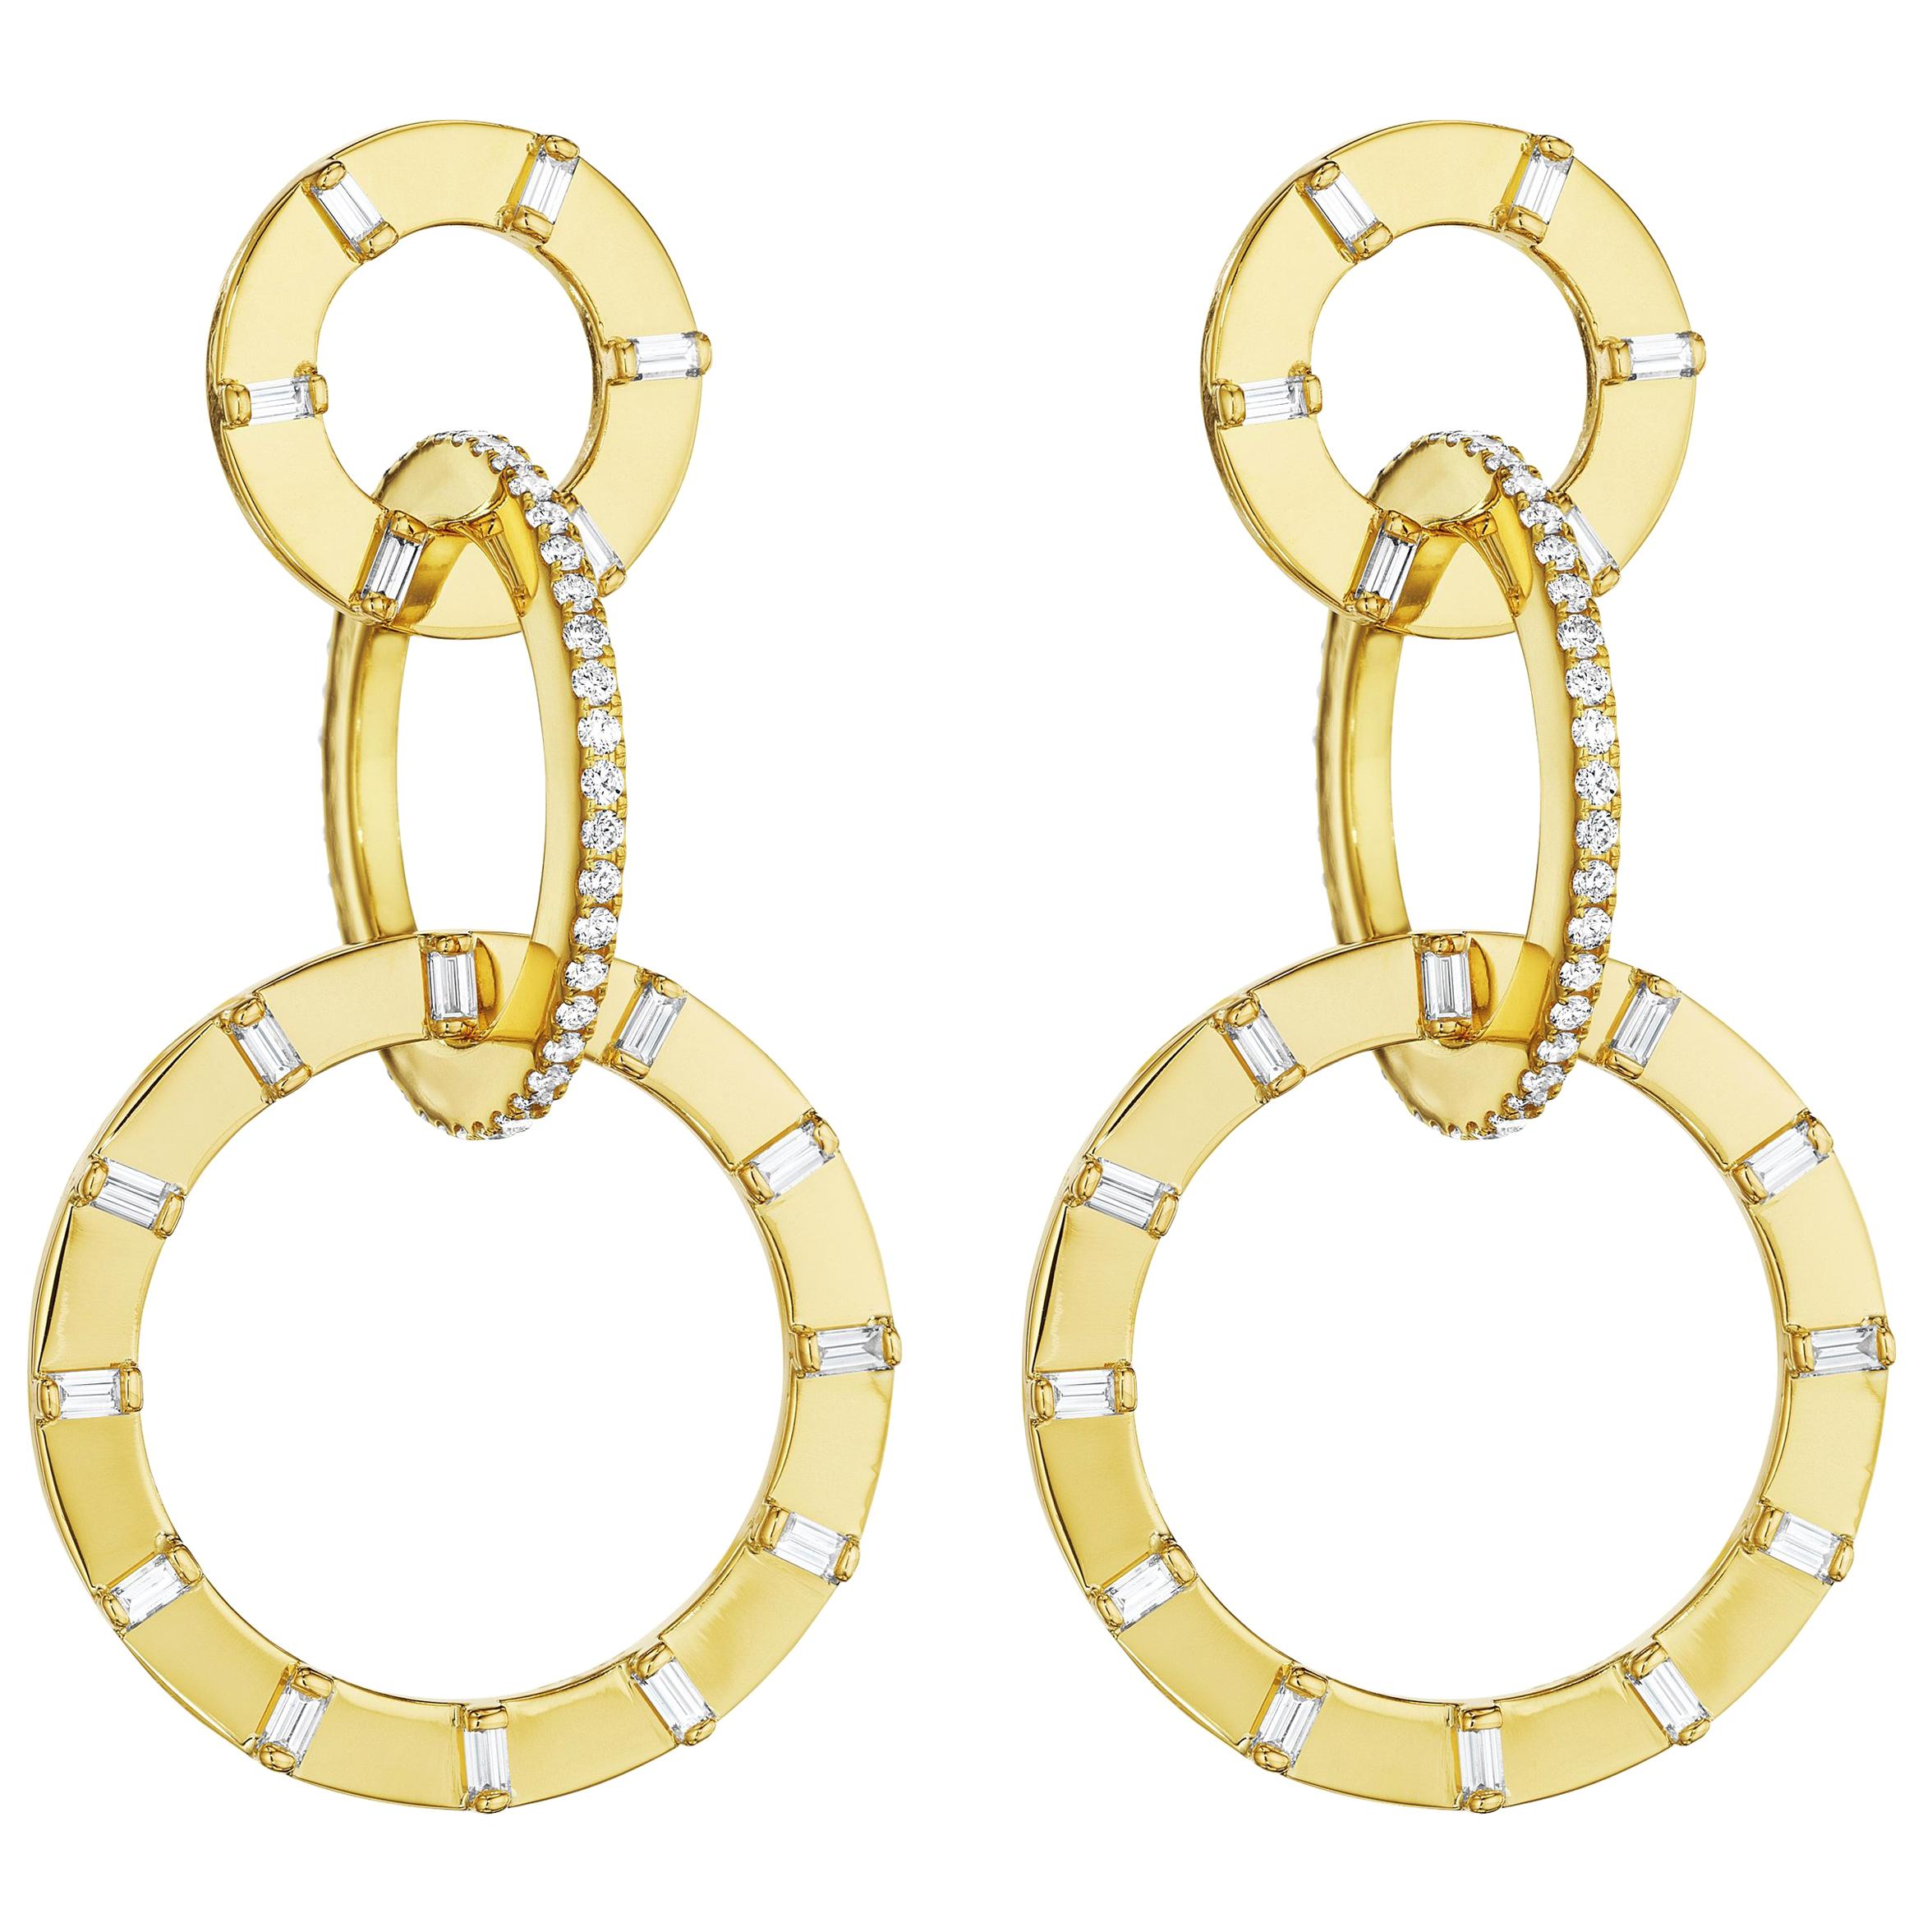 CADAR Unity Earrings in 18K Yellow Gold and 1.94 Carat Diamond 